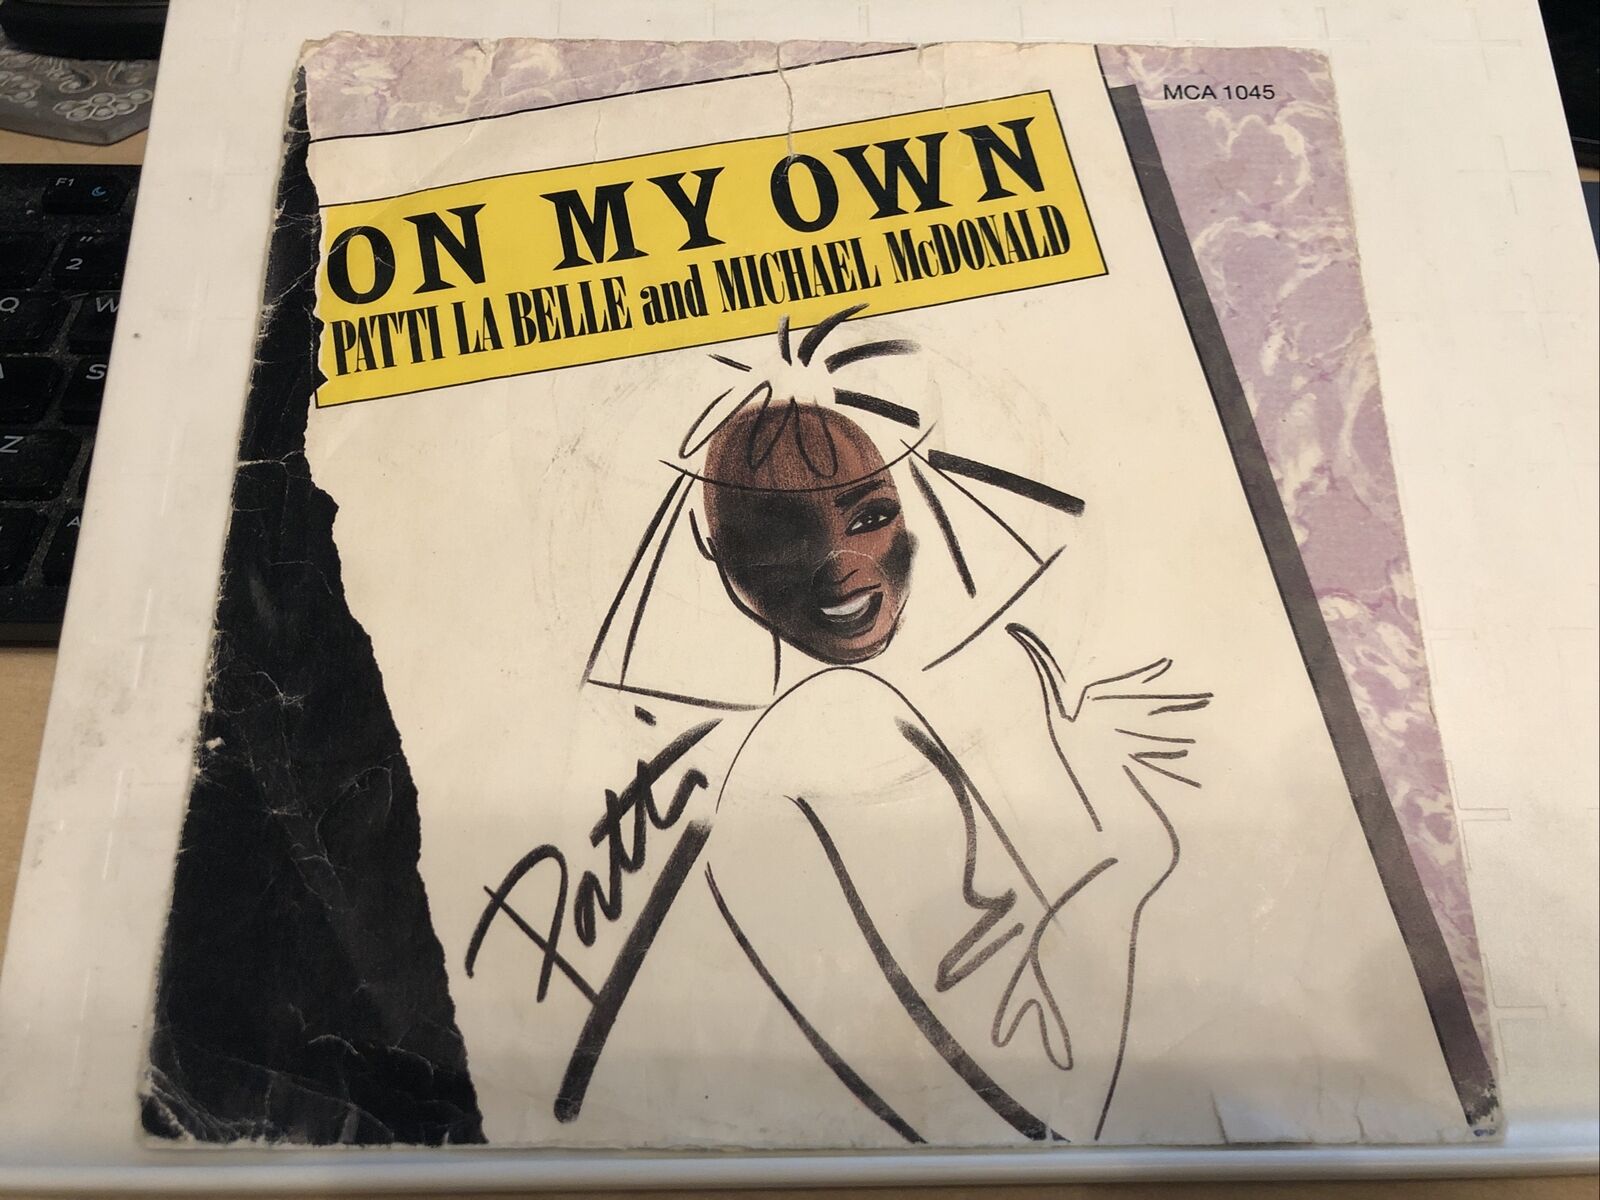 Patti Labelle & Michael McDonald - On My Own 7" Vinyl Single Record P/S